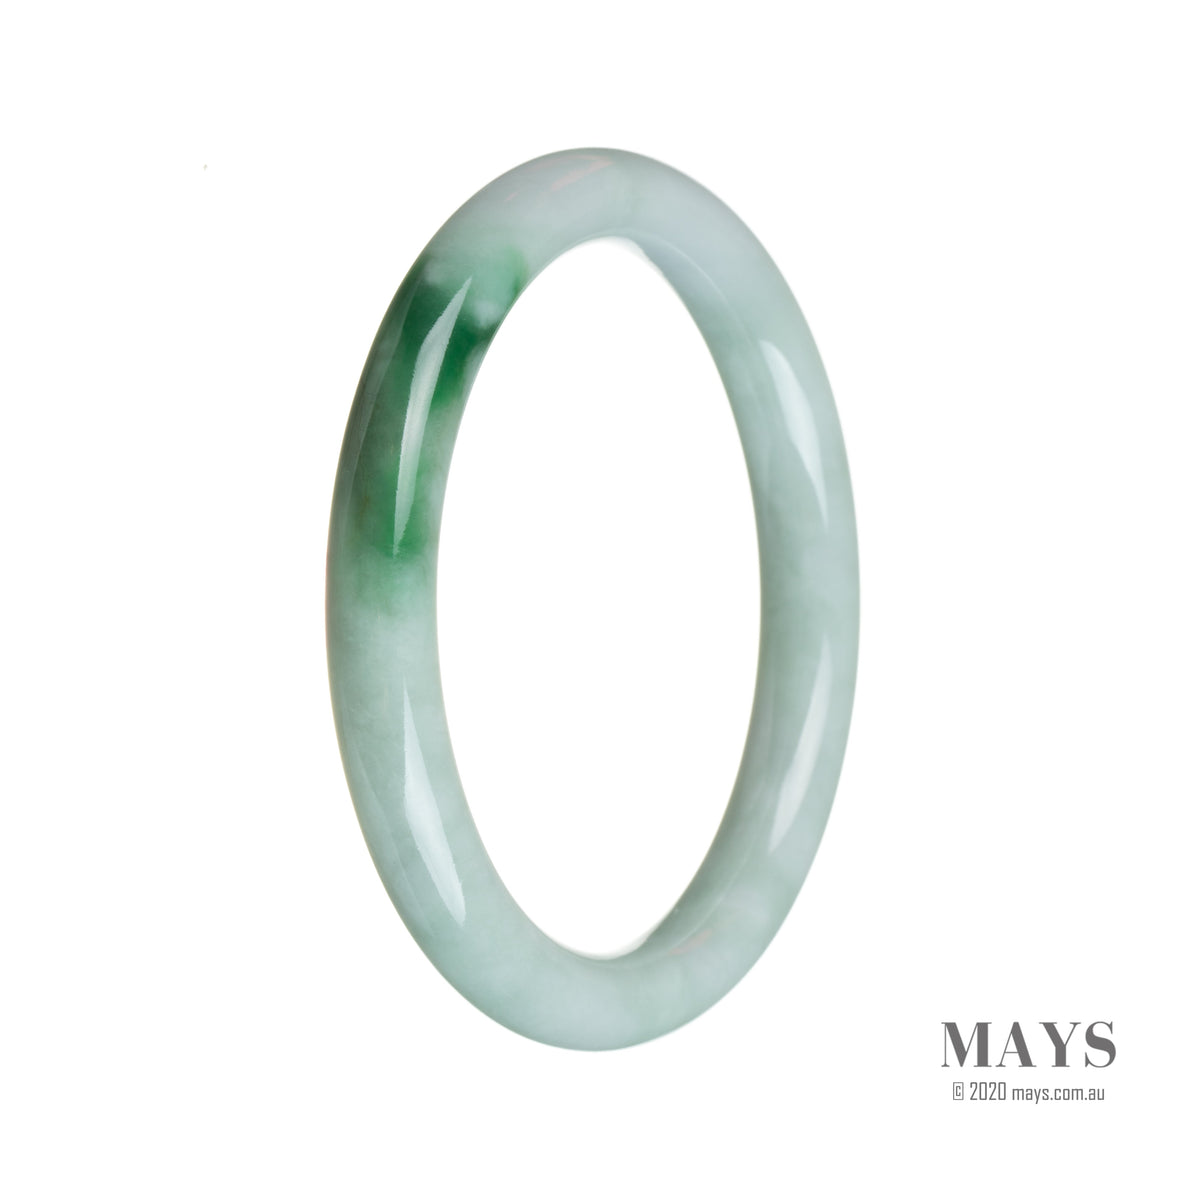 A round, 59mm diameter green on white pattern jade bangle bracelet, made of genuine Grade A jade.